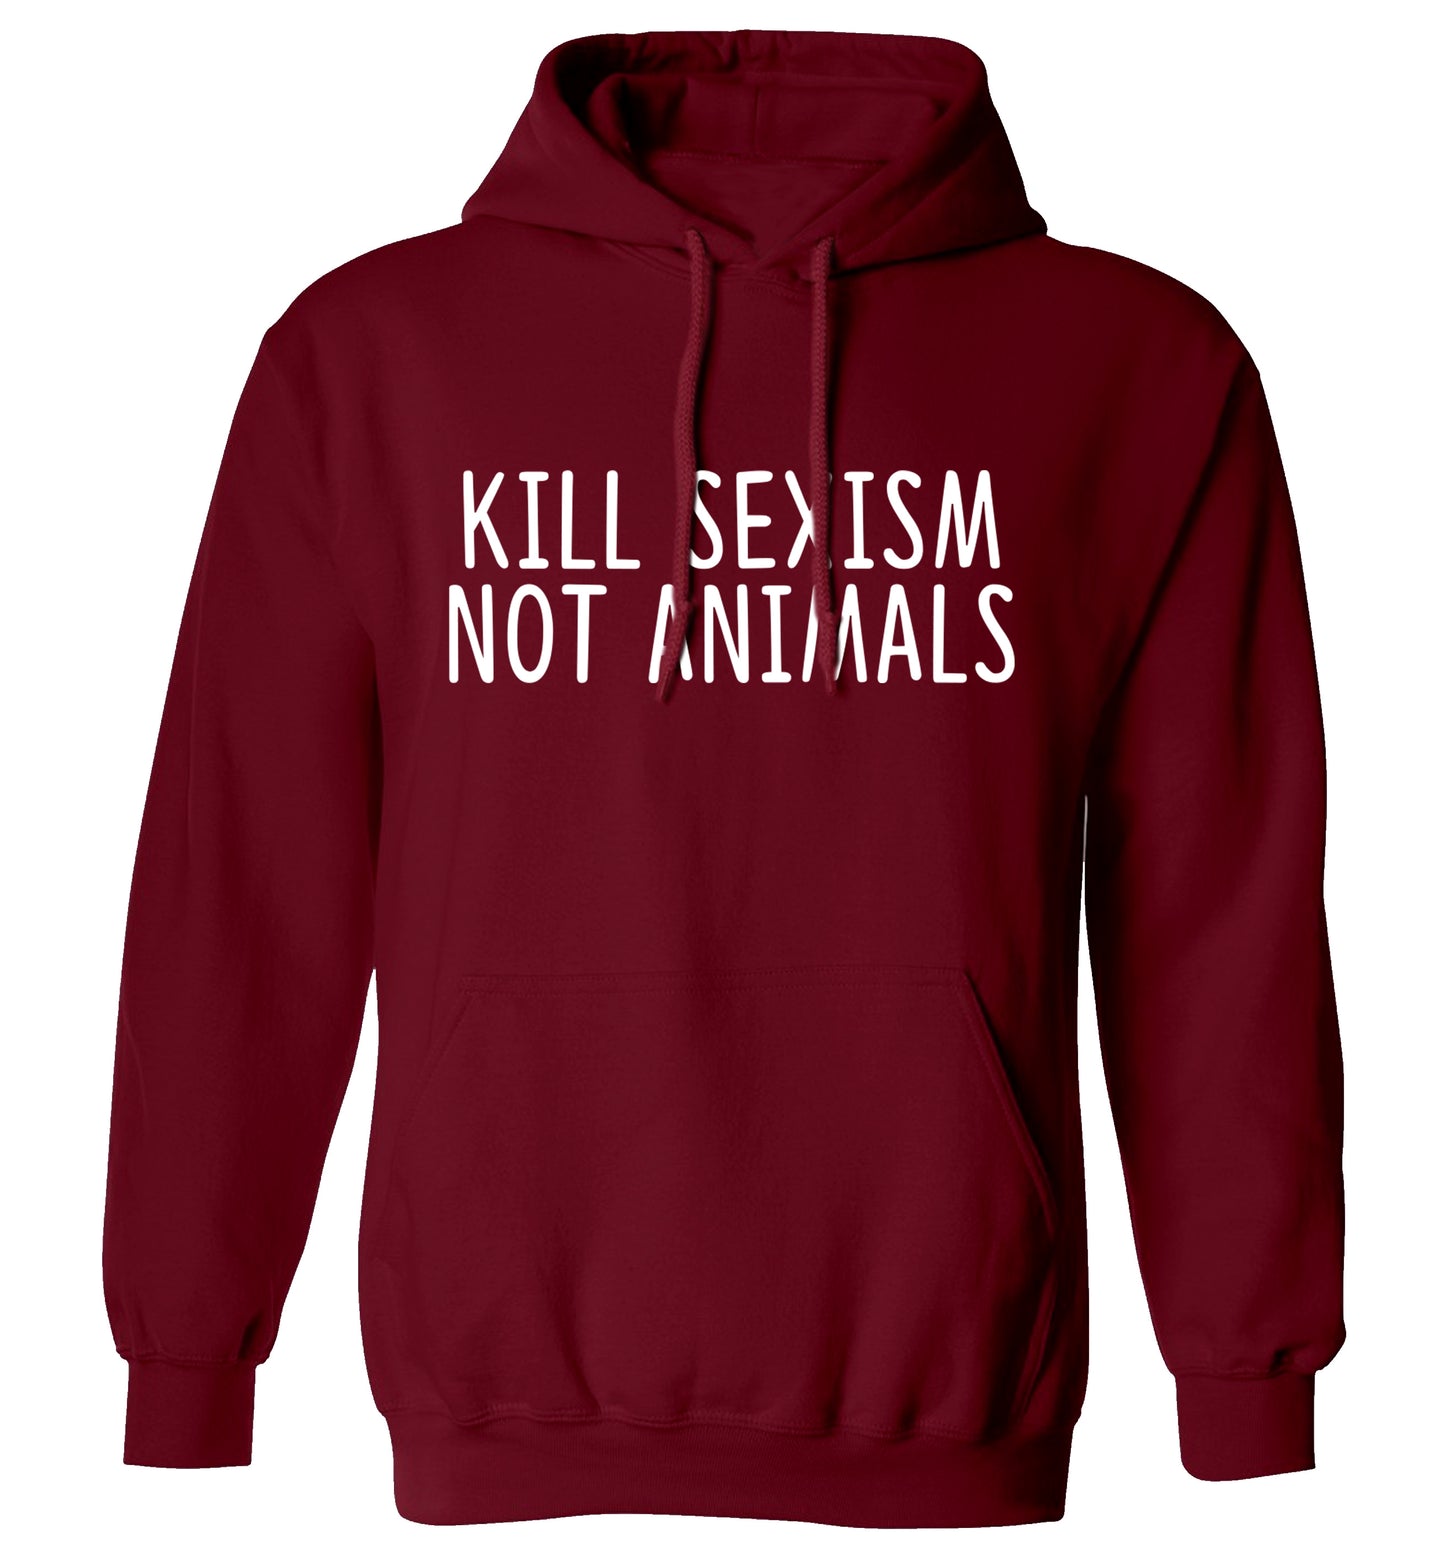 Kill Sexism Not Animals adults unisex maroon hoodie 2XL